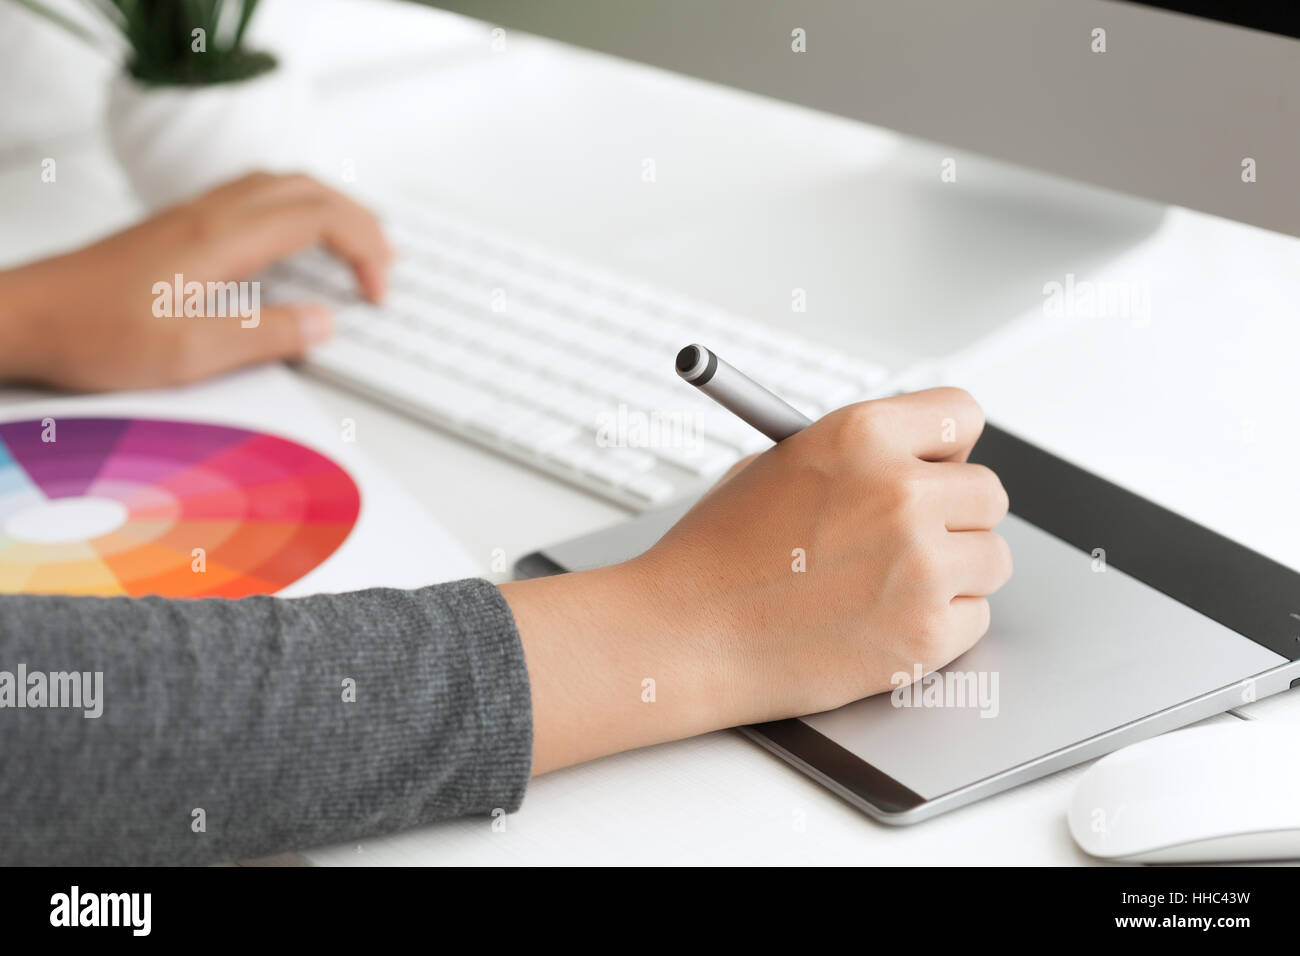 close up graphic design using digital pen tablet on desk workspace Stock Photo